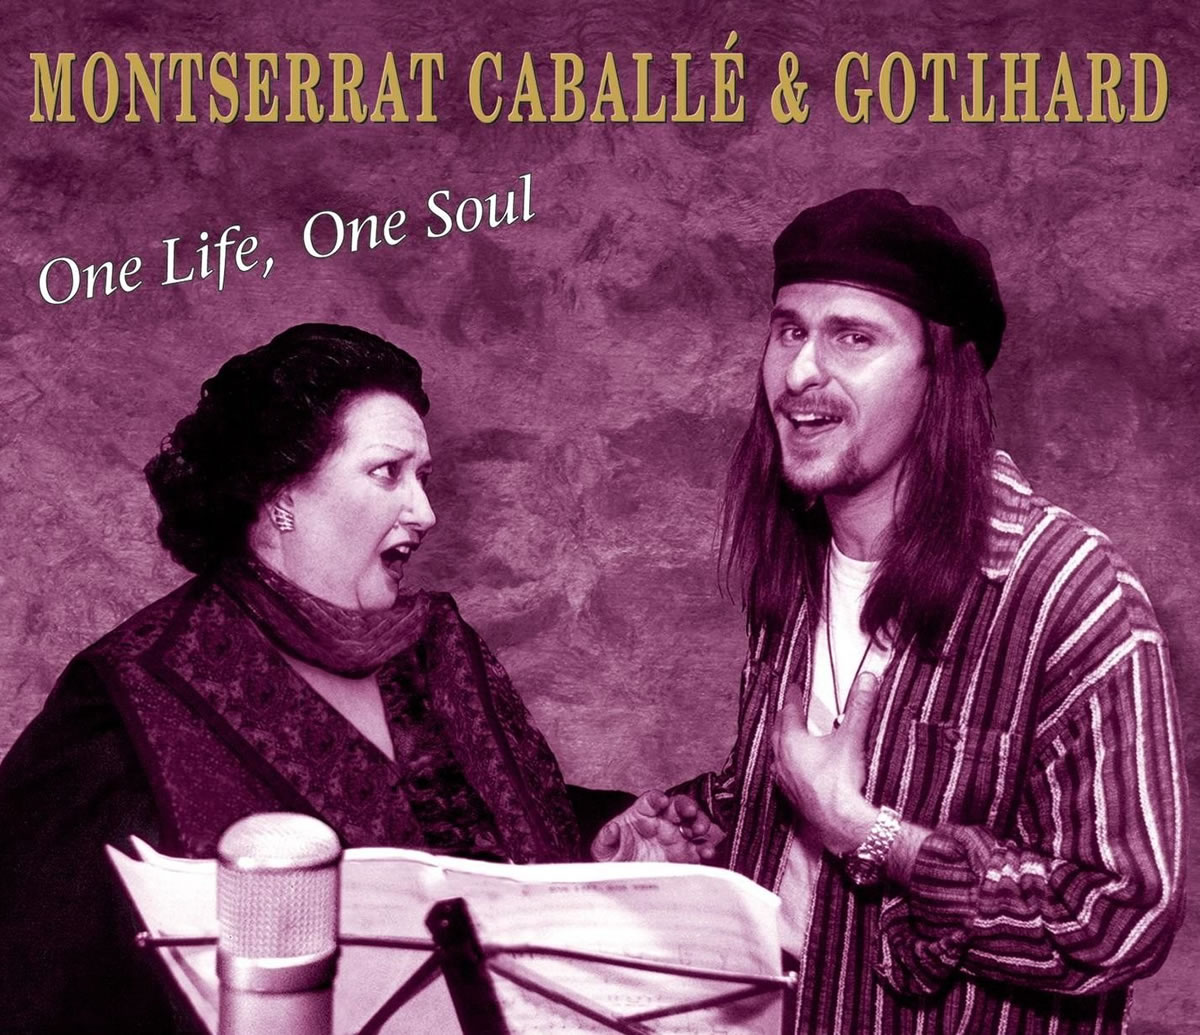 Montserrat Caballé & Gotthard One Life, One Soul cover artwork